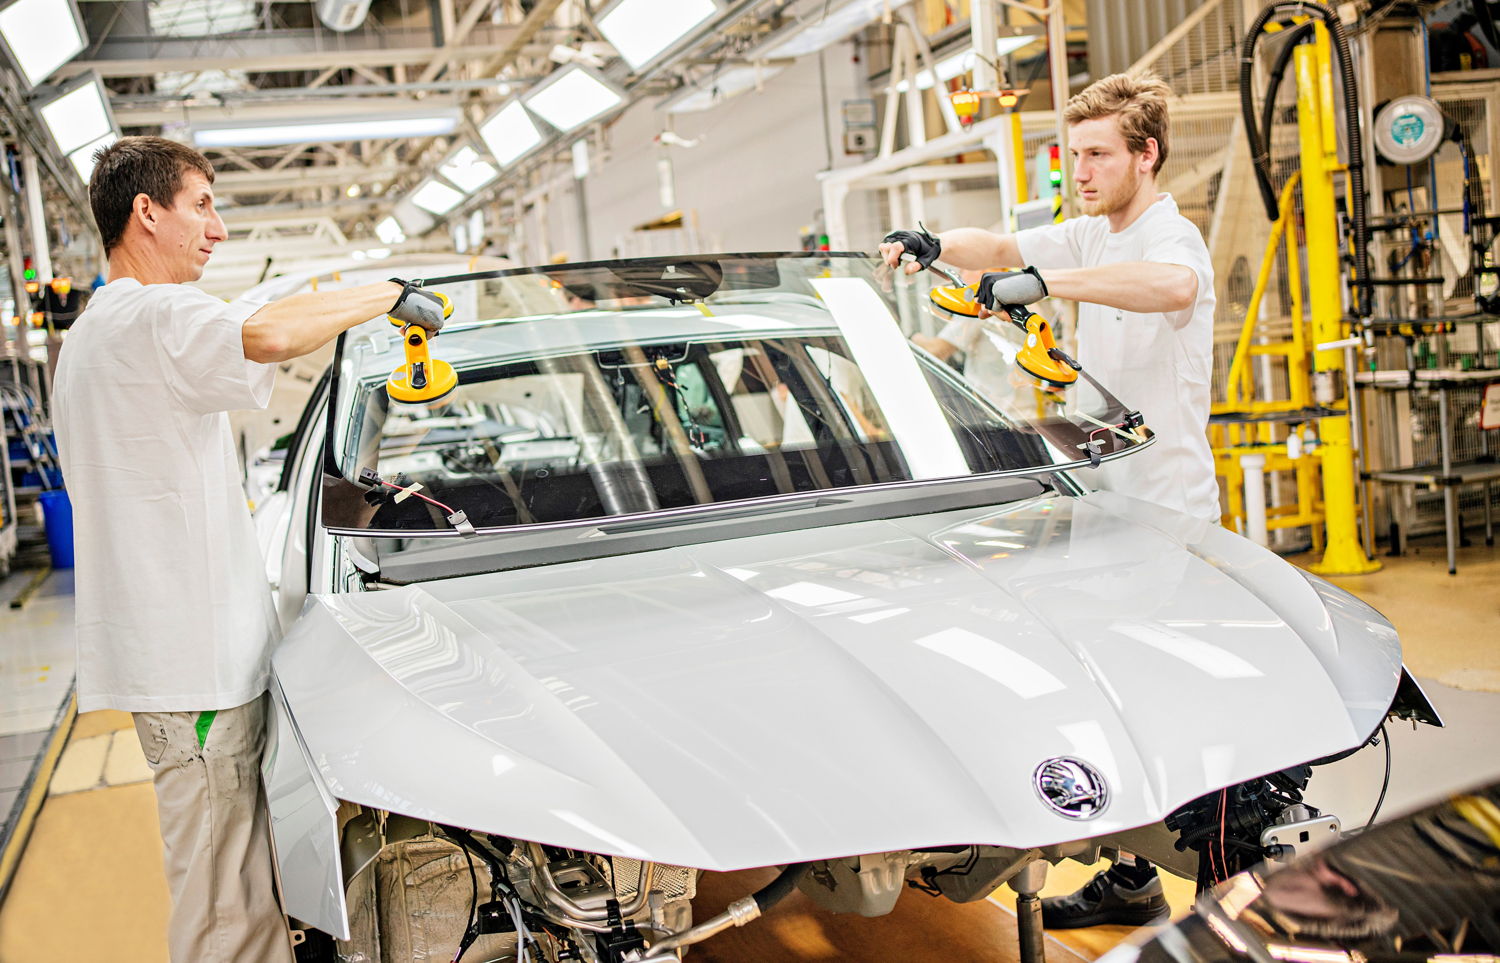 The new generation of the OCTAVIA rolls of the assembly
line at ŠKODA AUTO’s headquarters in Mladá Boleslav.